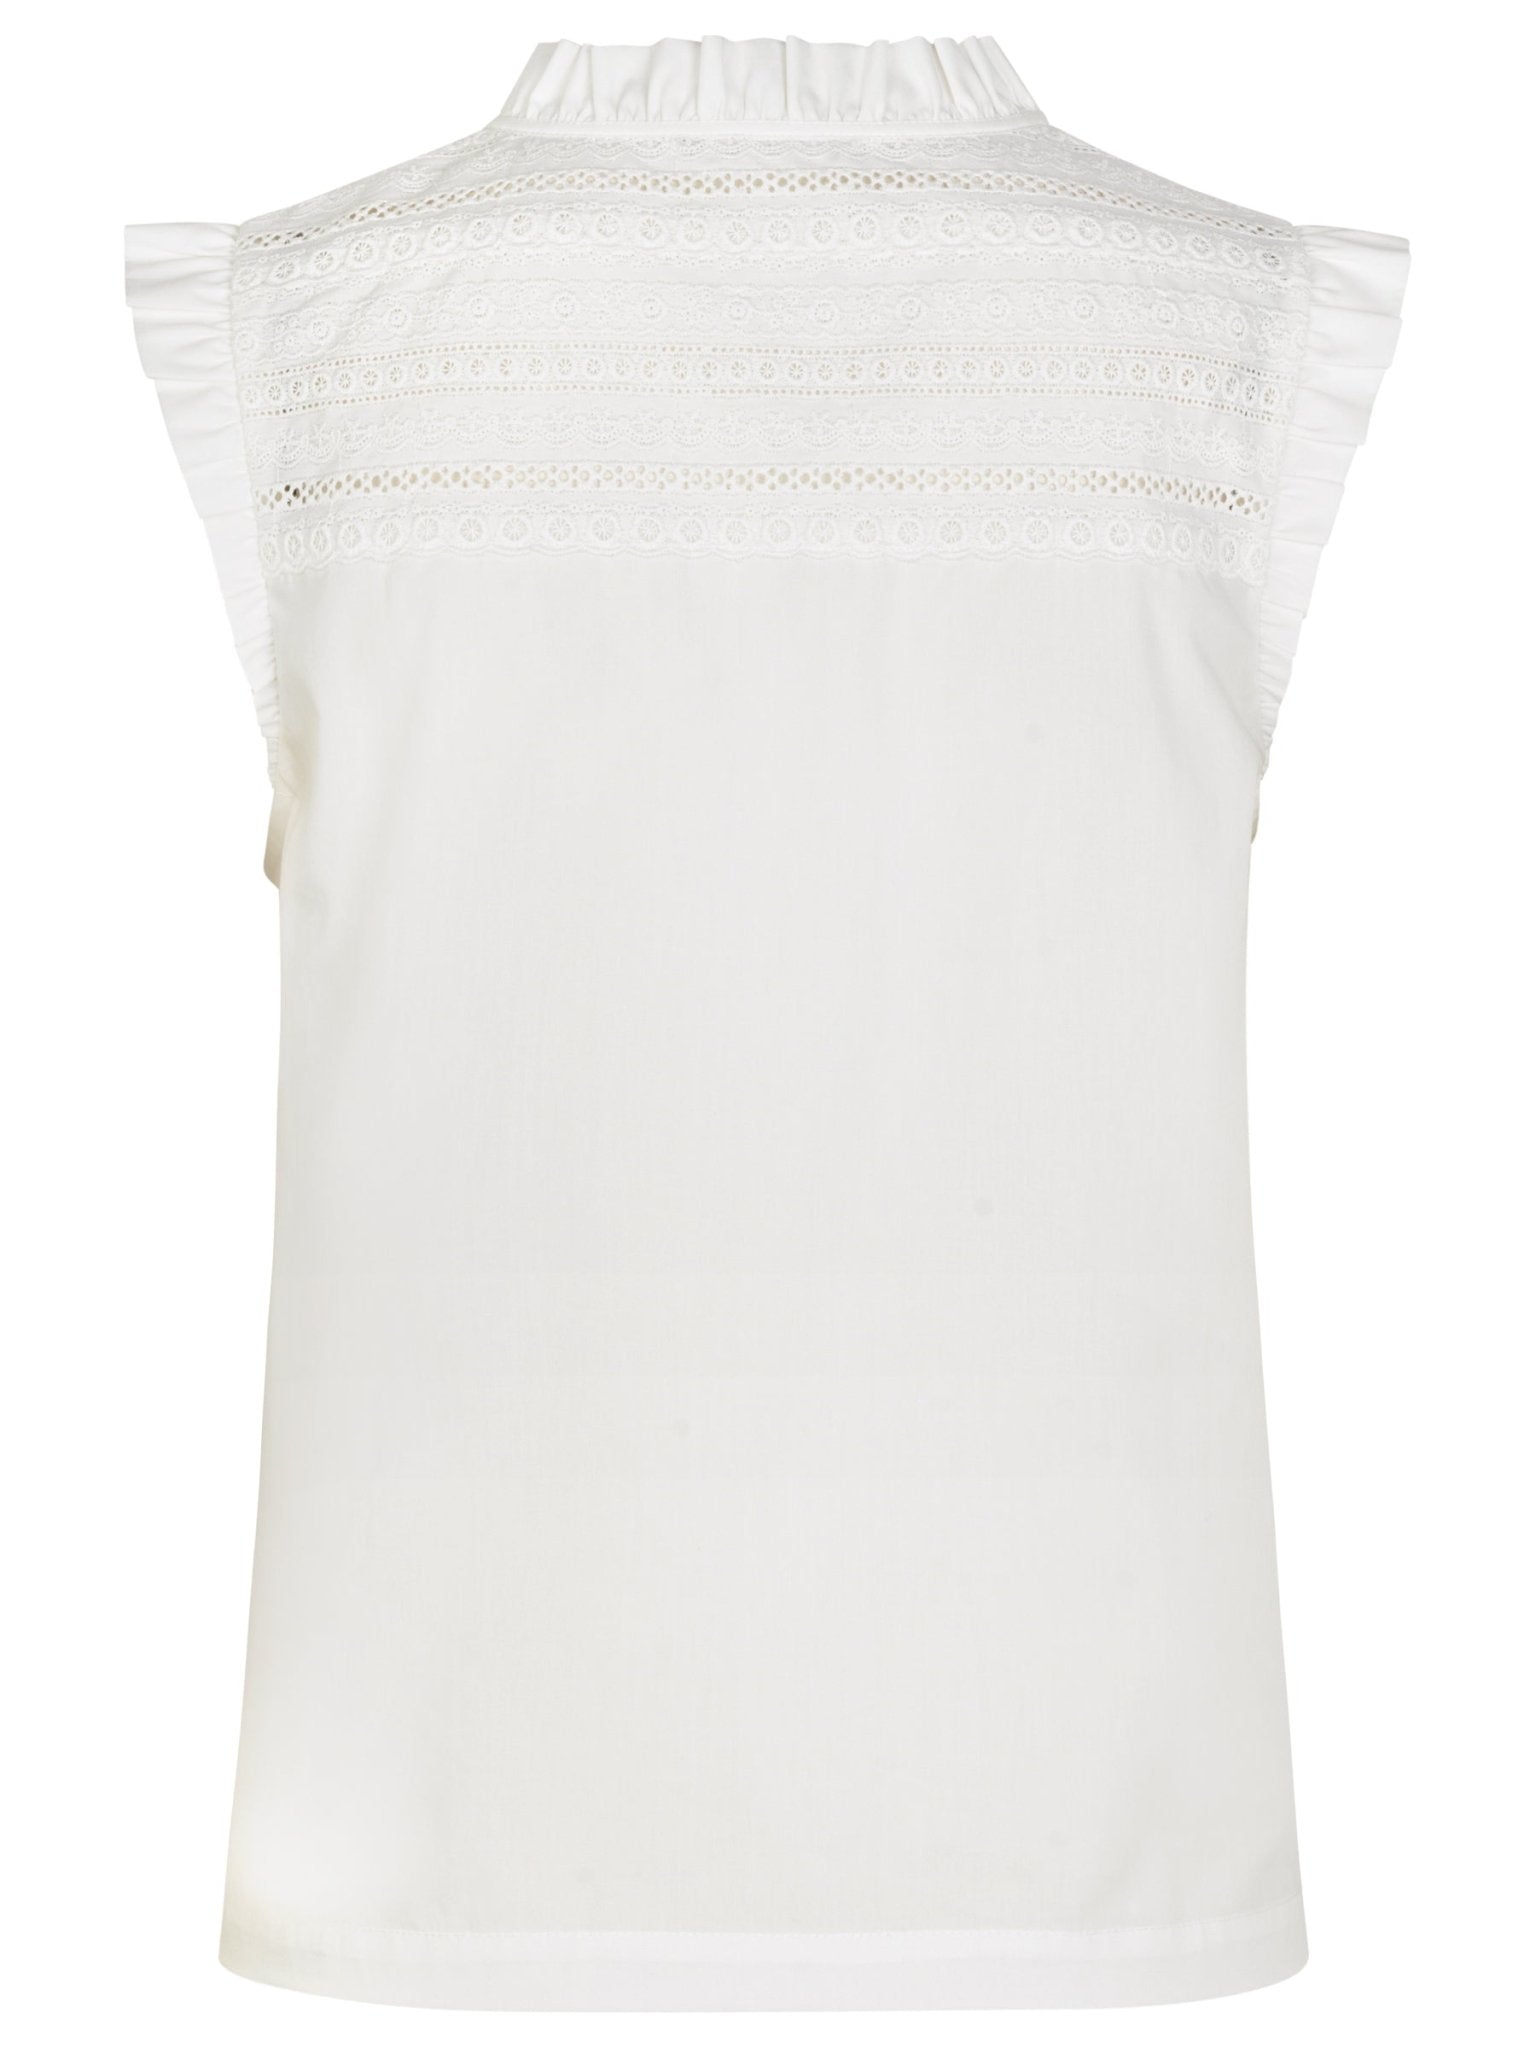 Shop Tie Neck Sleeveless Top in White Organic Cotton - Rosemunde